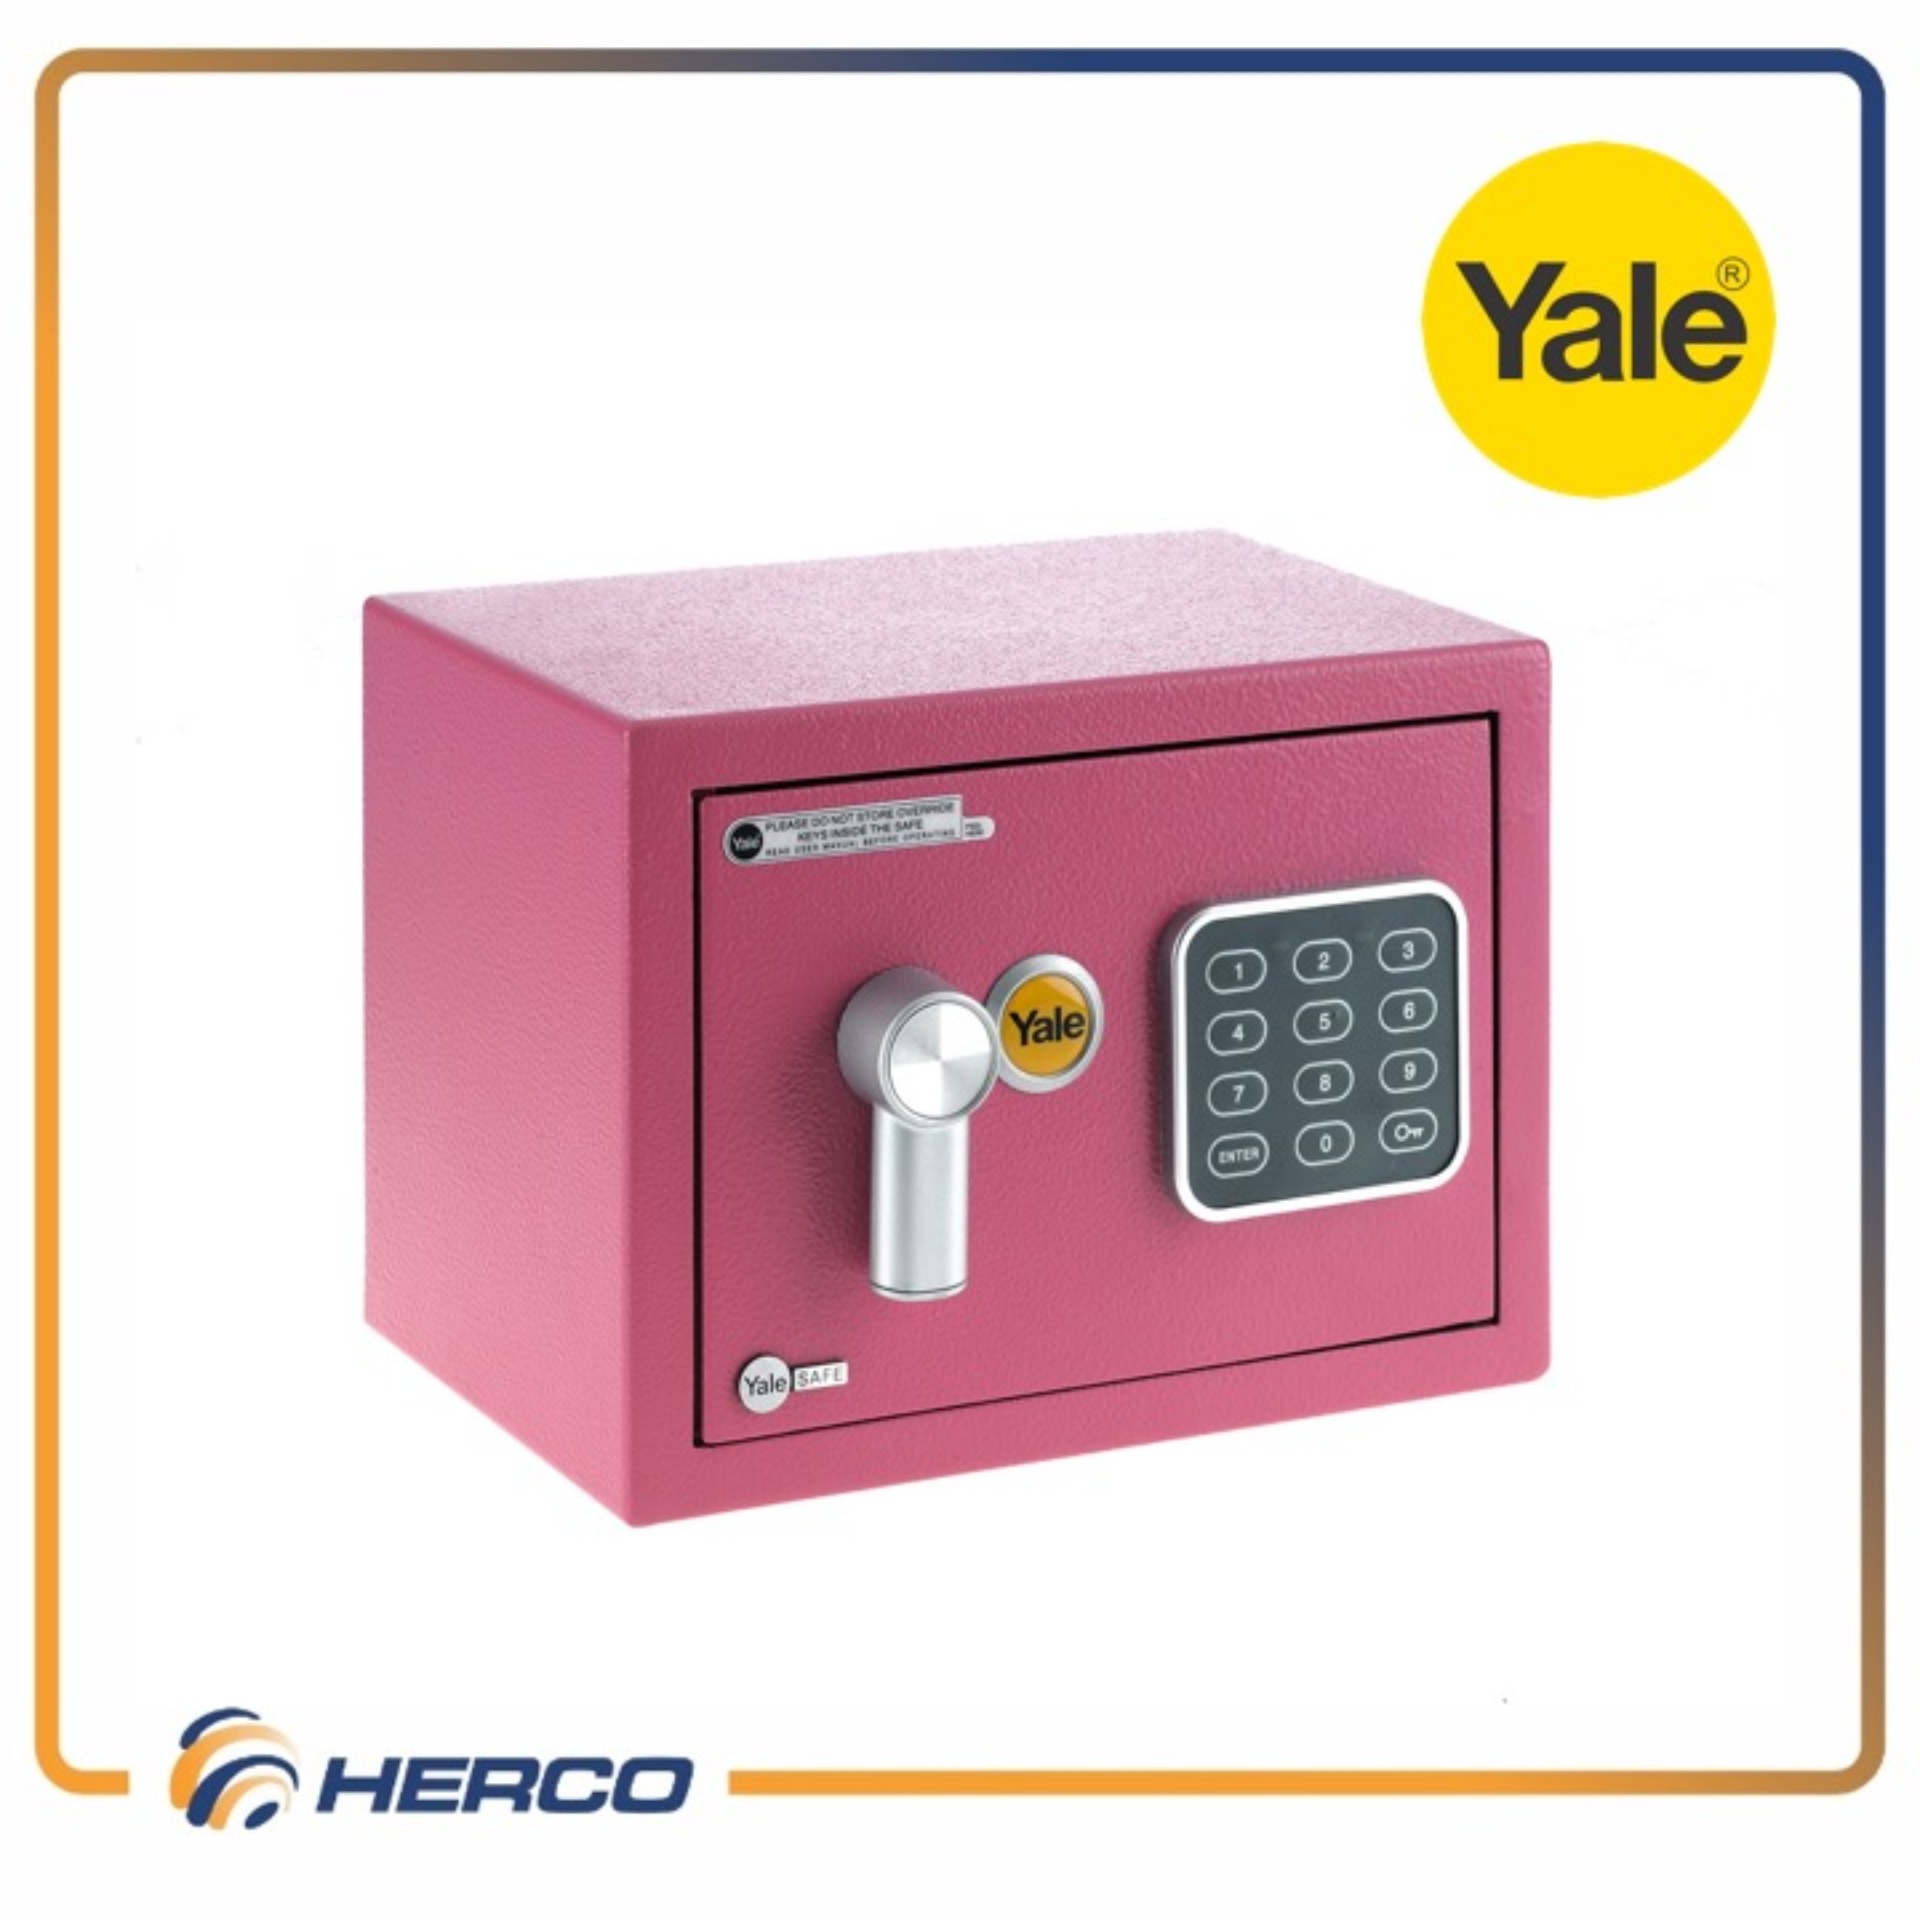 Yale Home Electronic Safe Box (Mini) - Pink